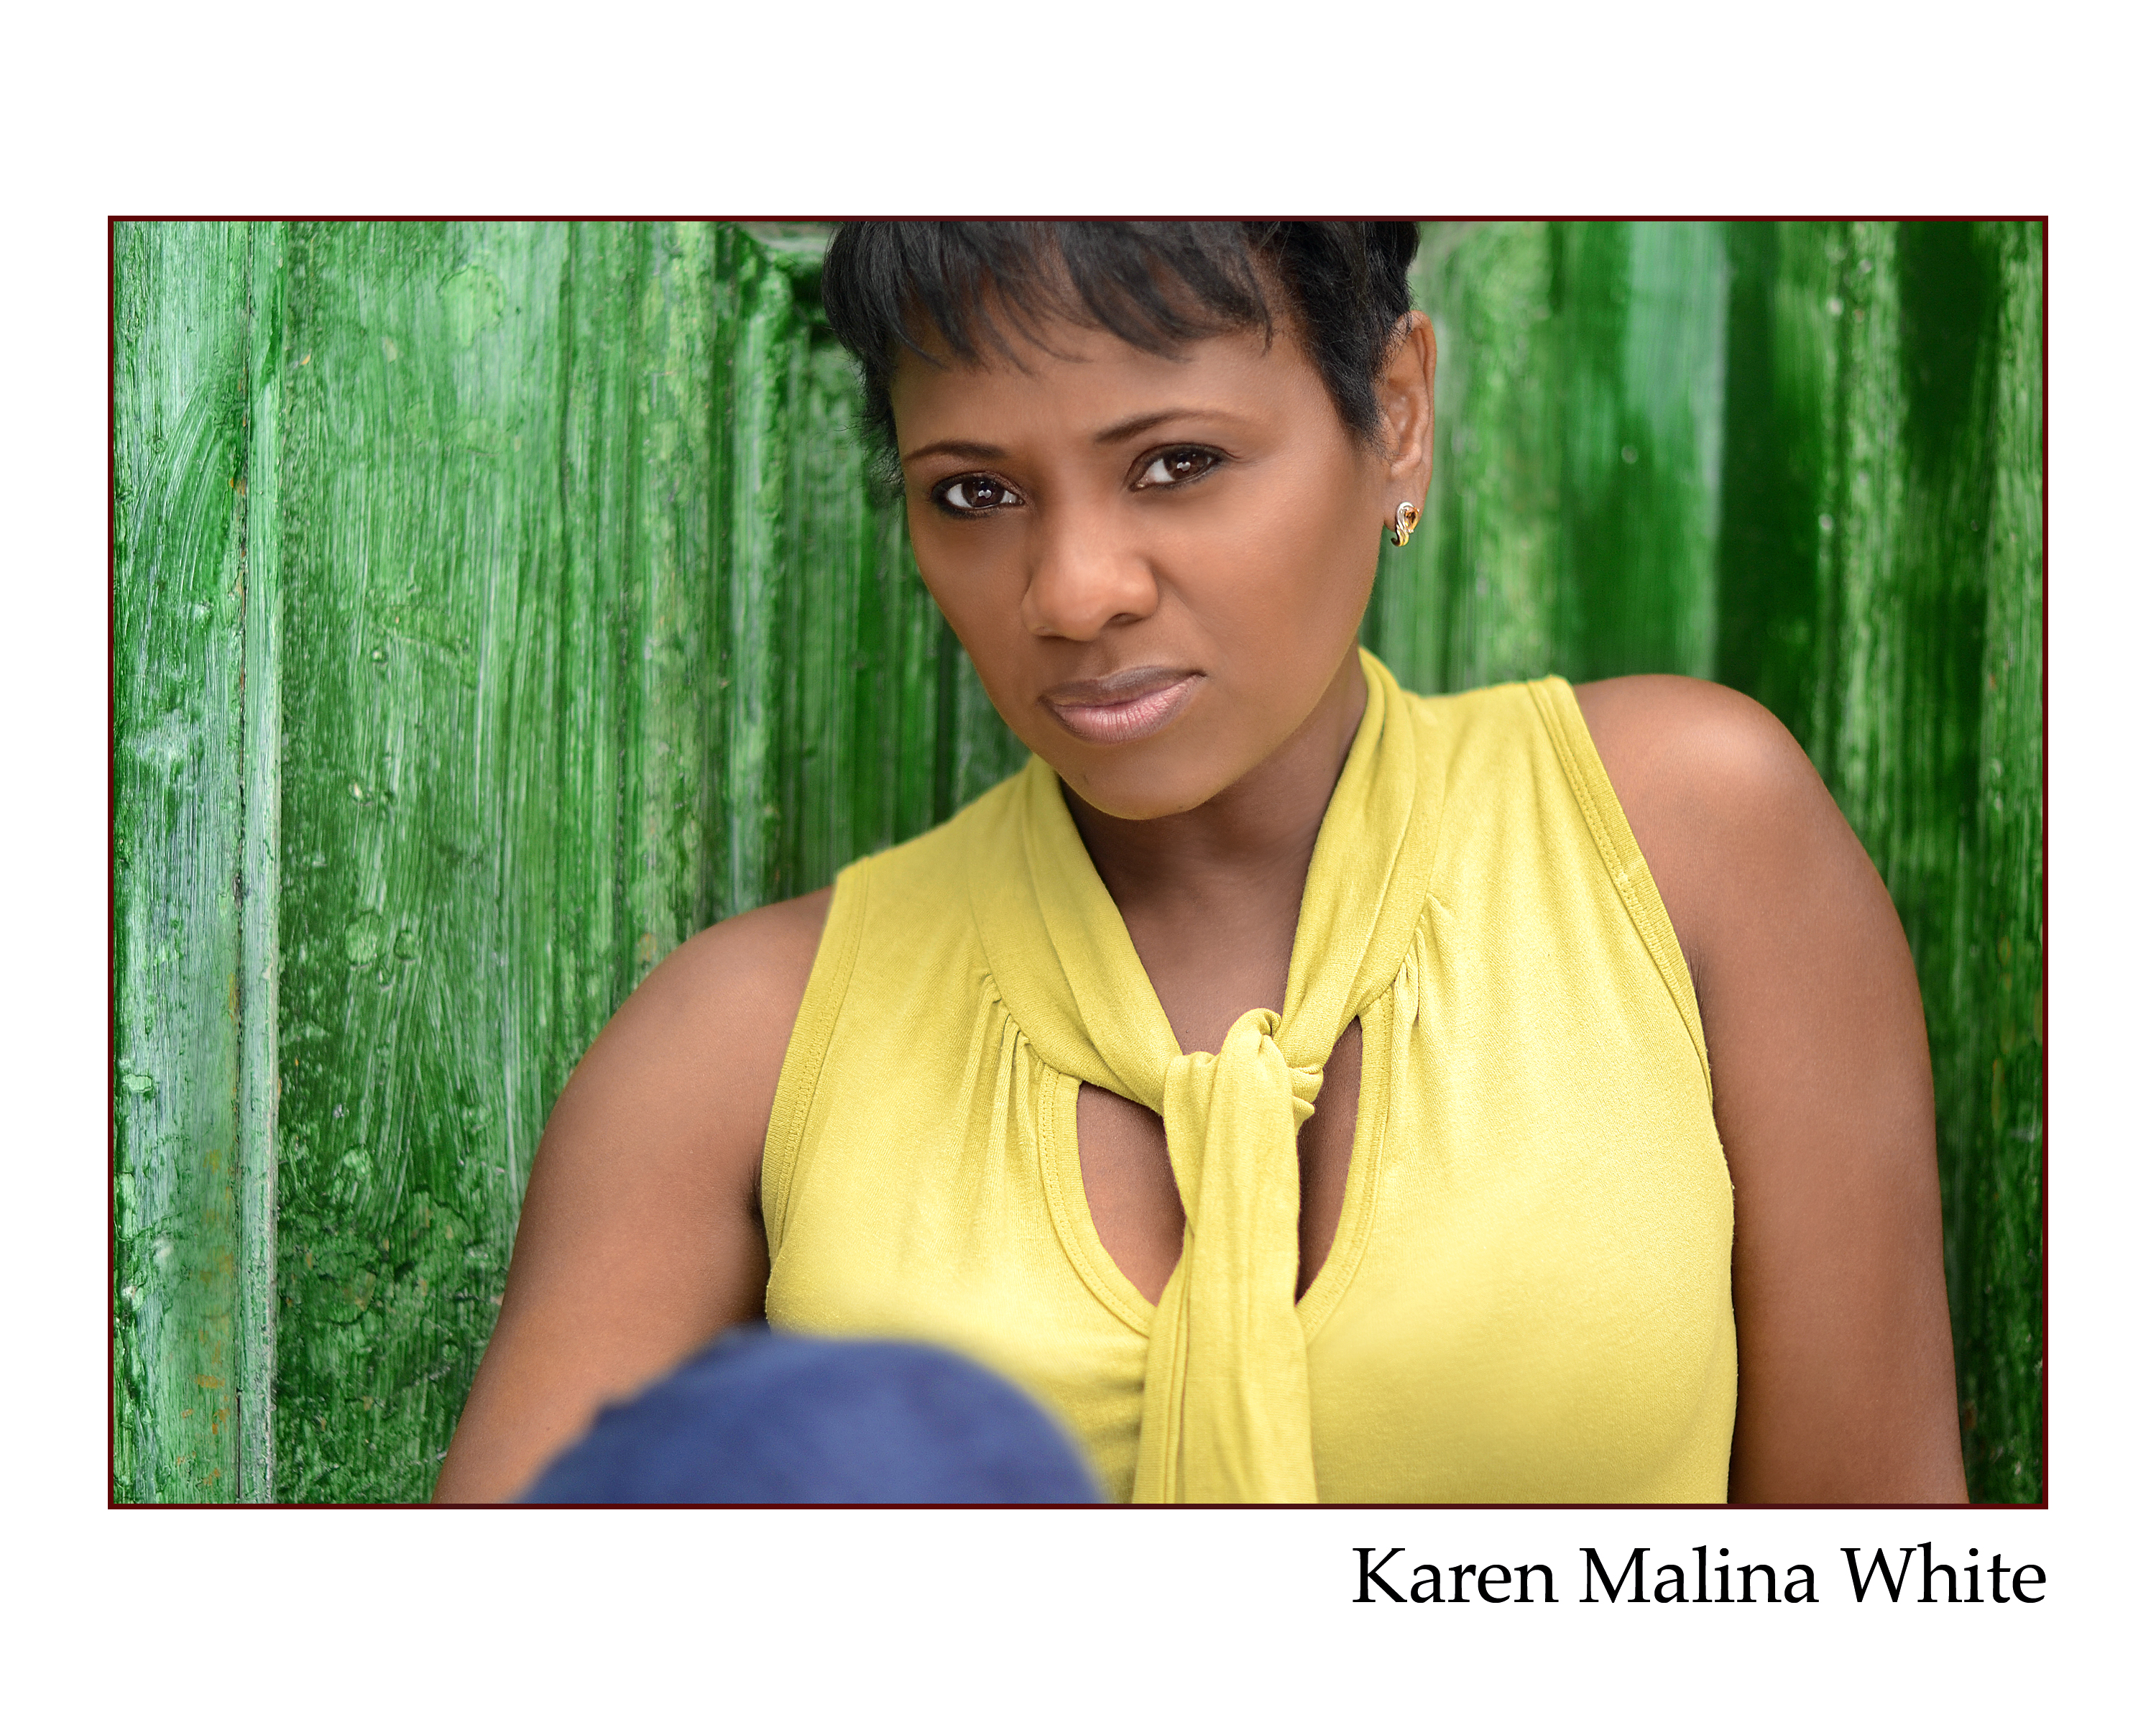 Karen Malina White